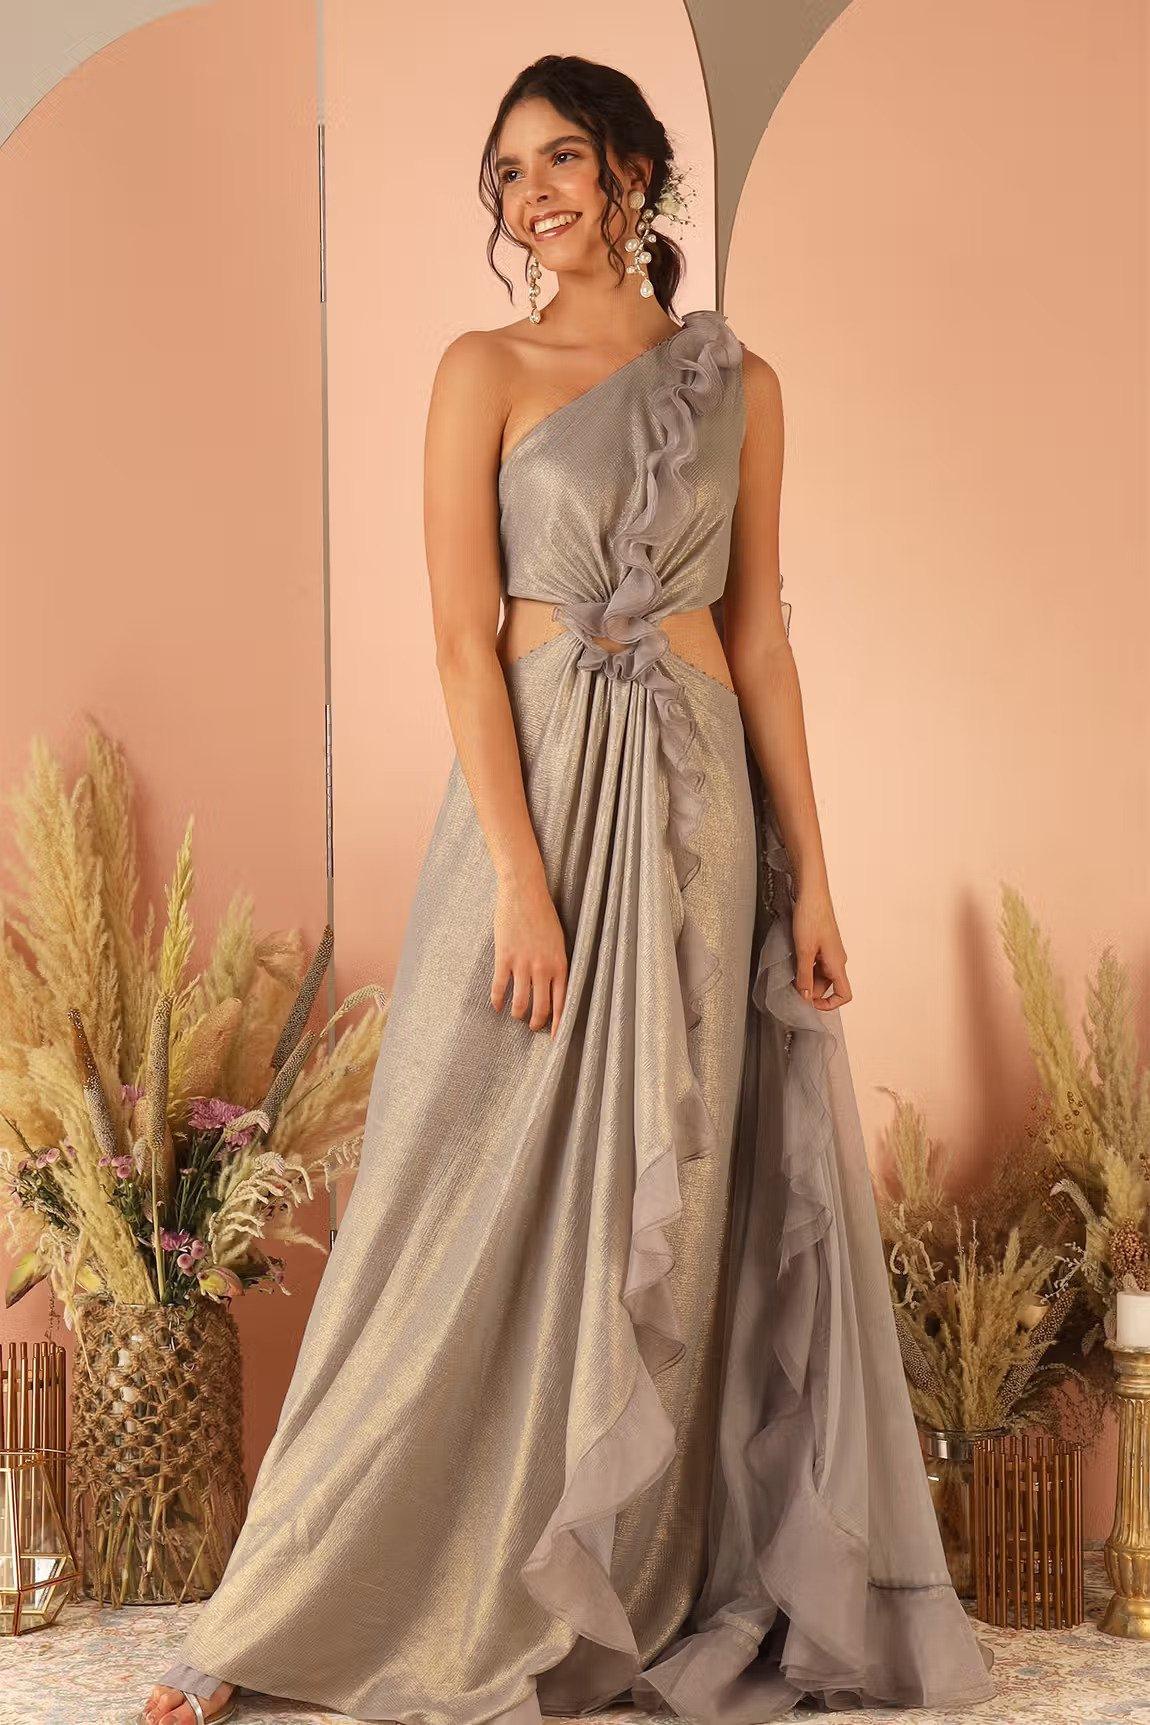 Buy Cotton Base Designer Indian Gown Online